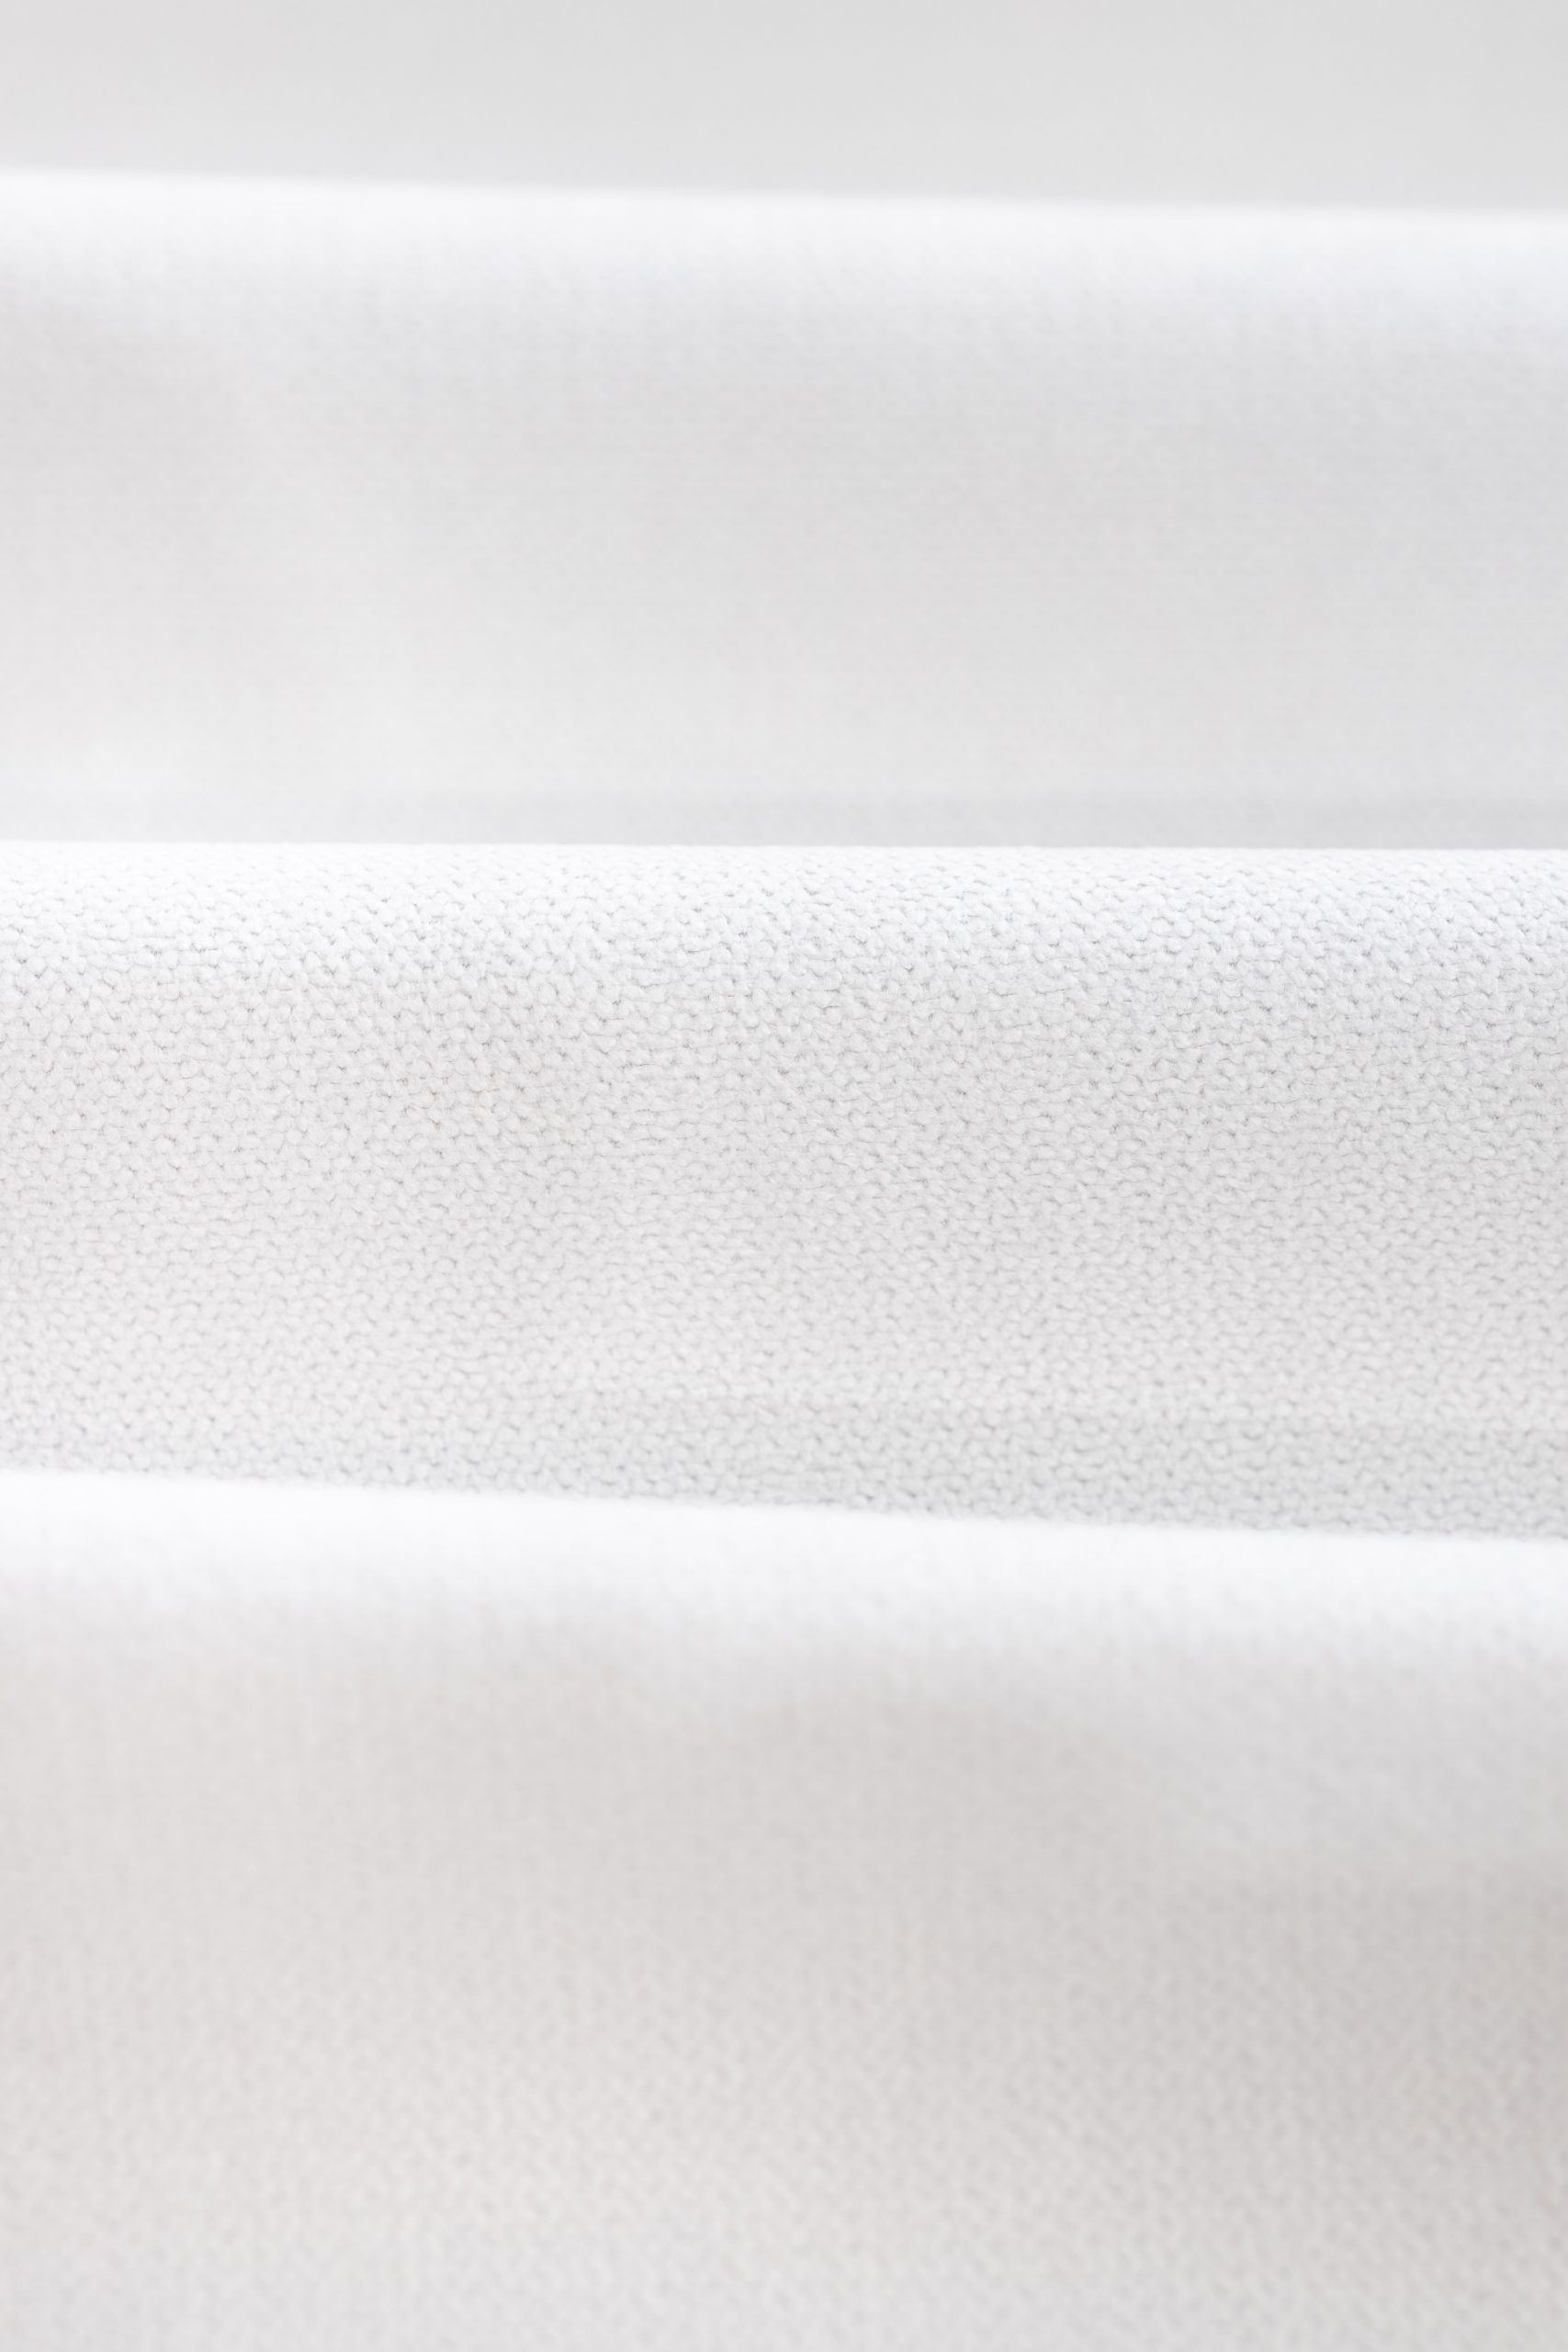 Cityscape Grid Blanc fabric